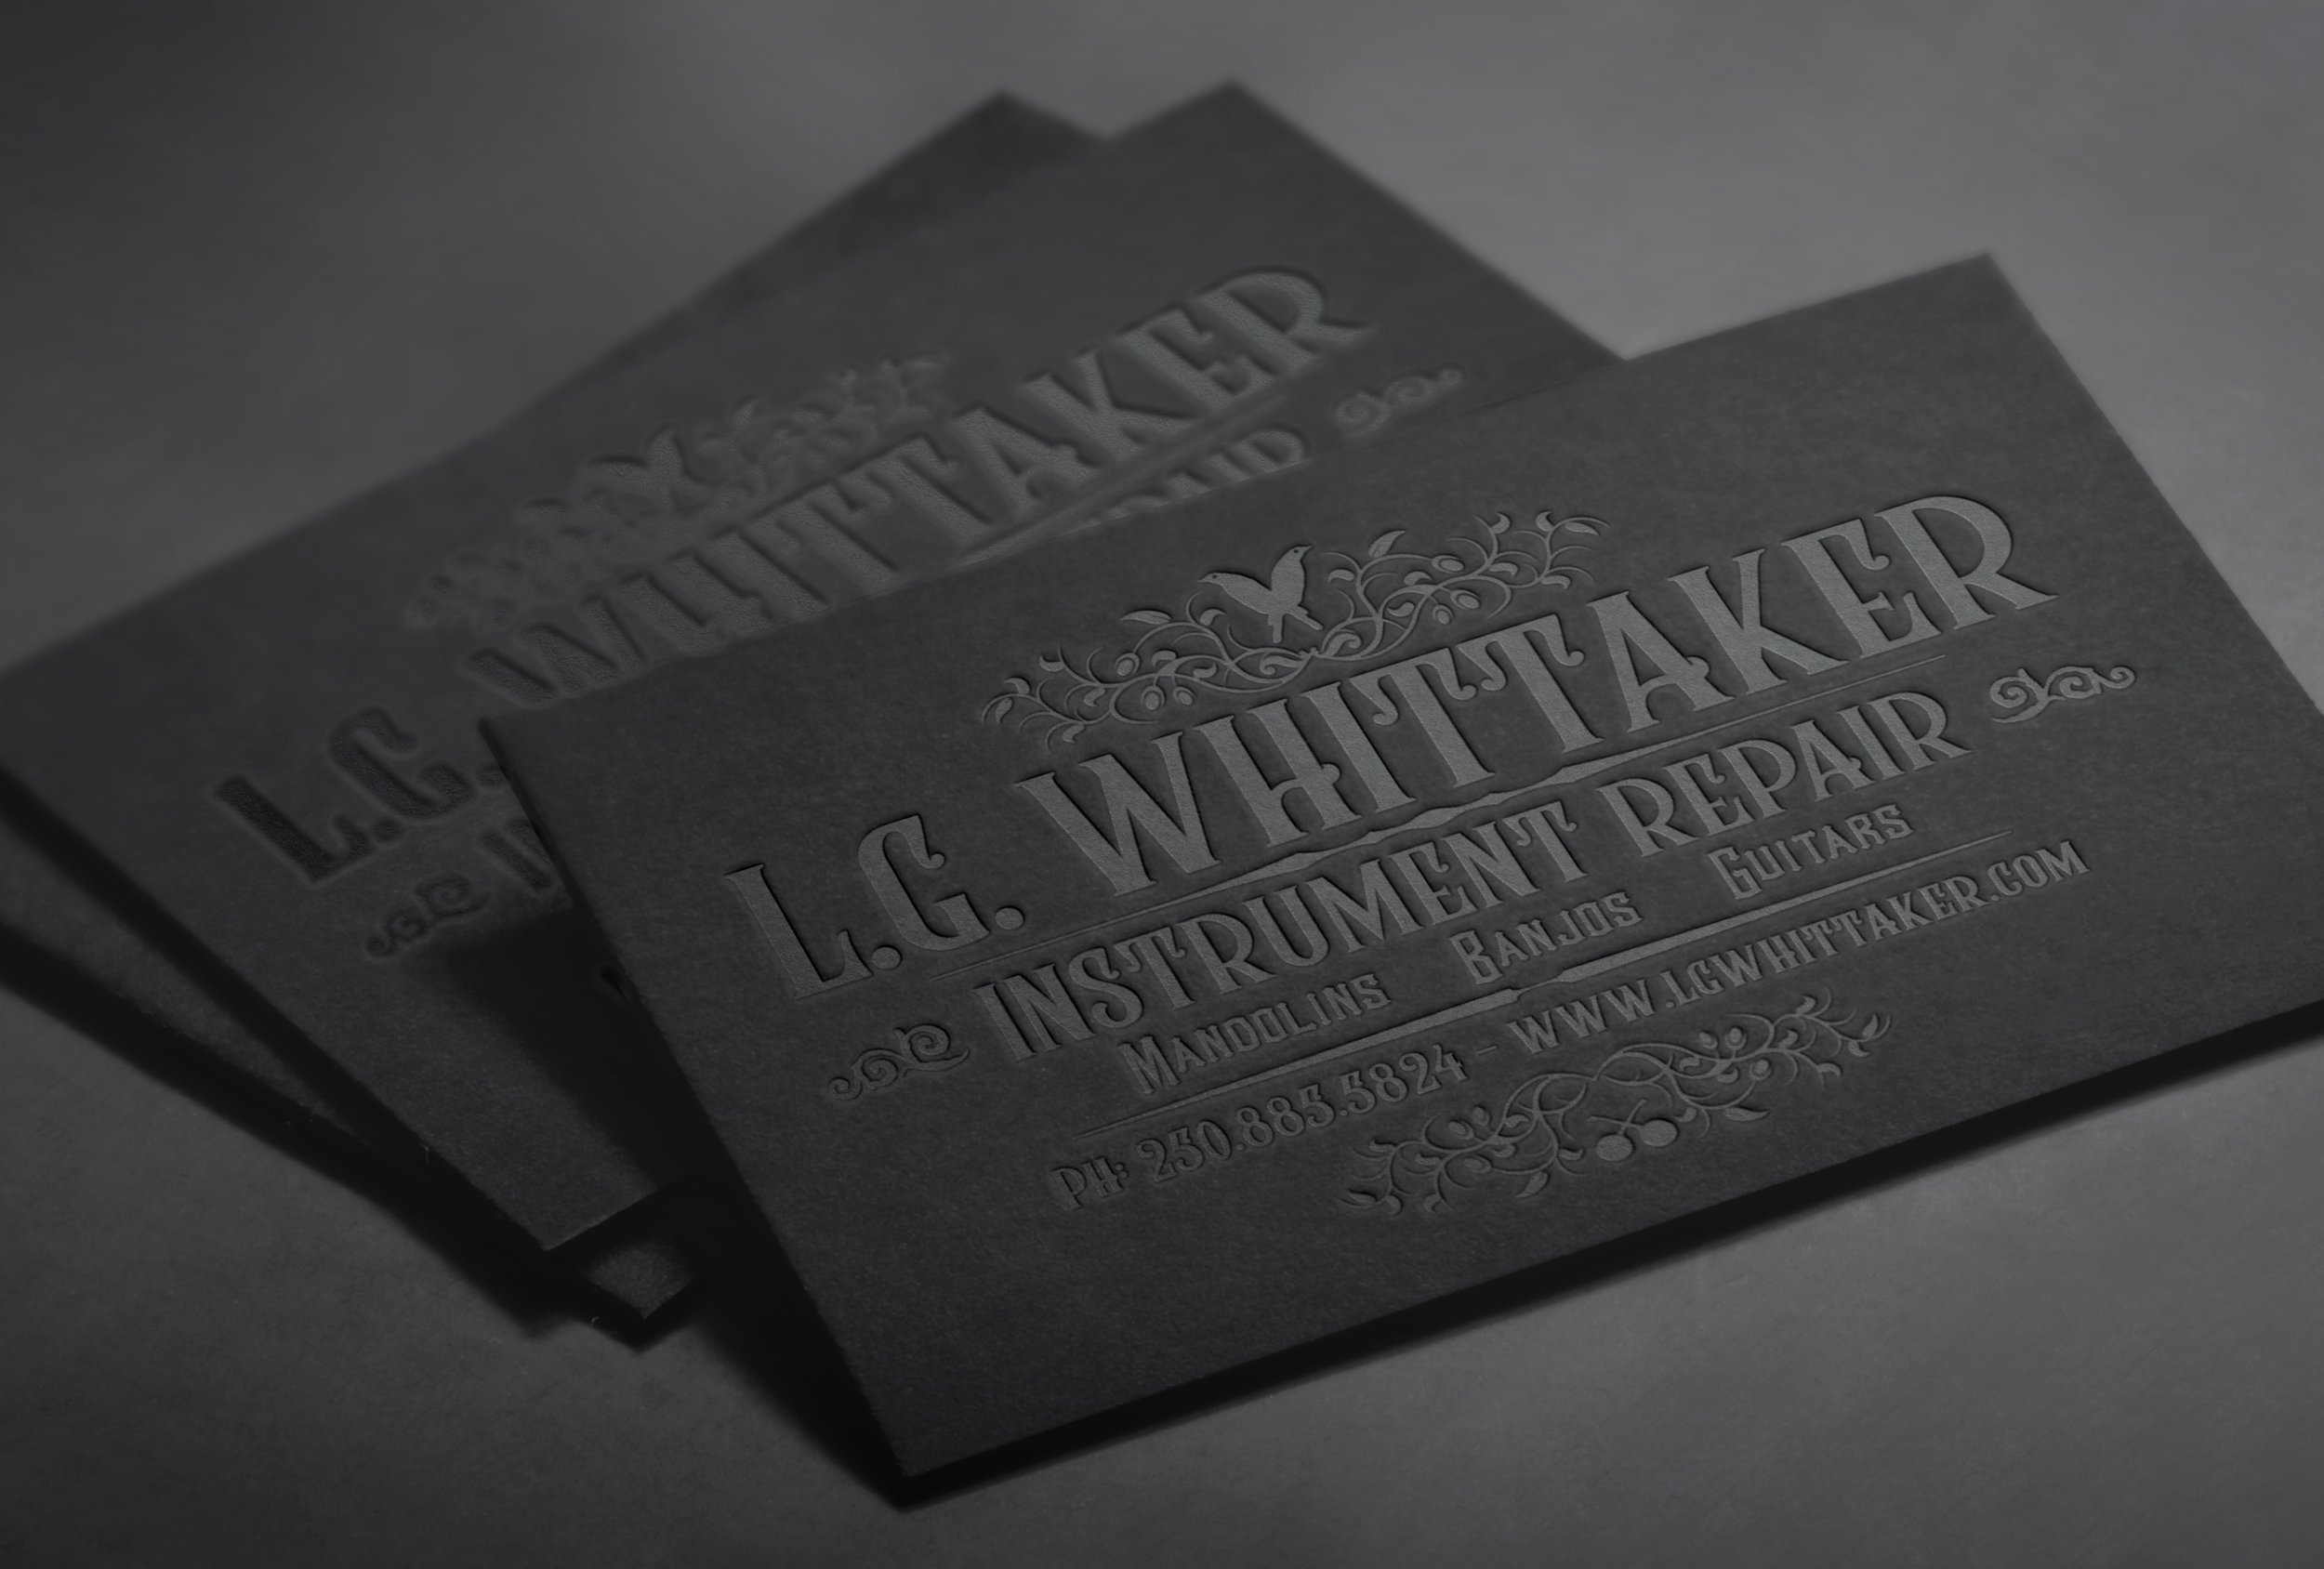 Business Card Design: L.G. Whittaker Instrument Repair